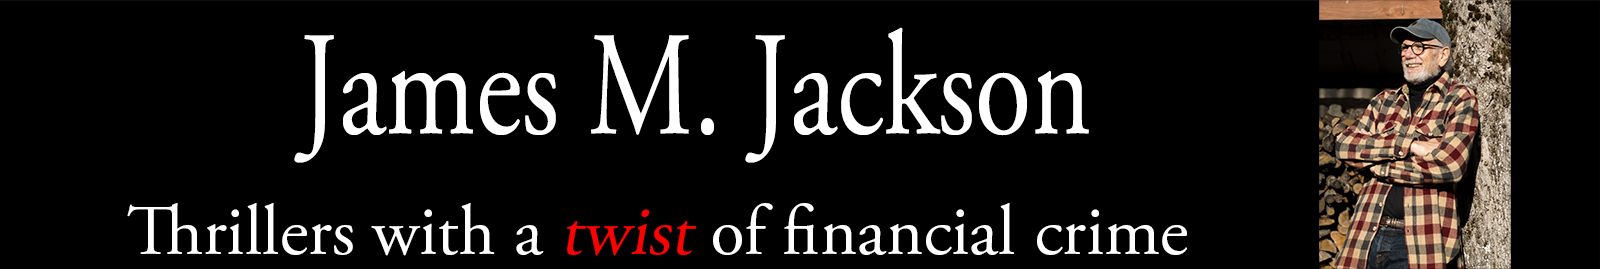 Banner: James M Jackson